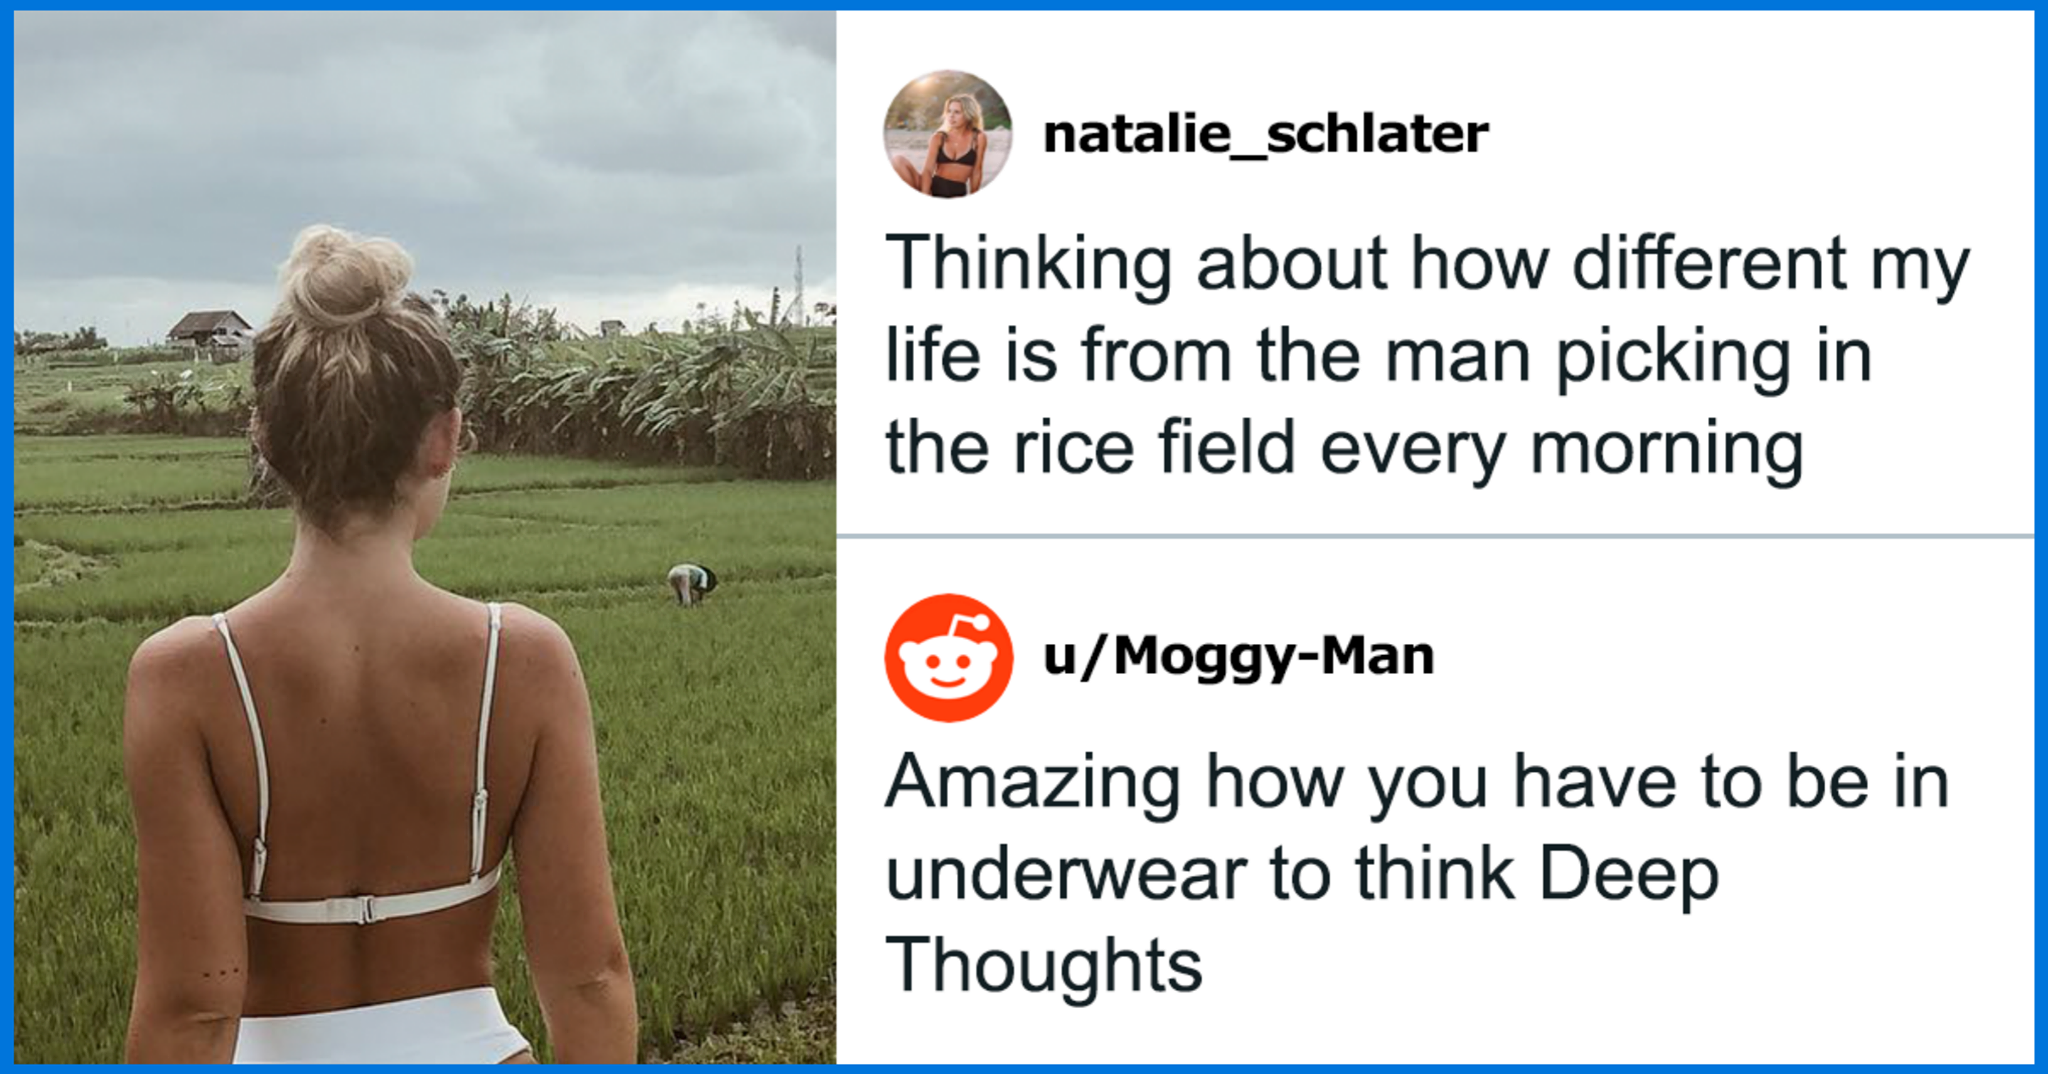 Instagram model making fun of rice workers